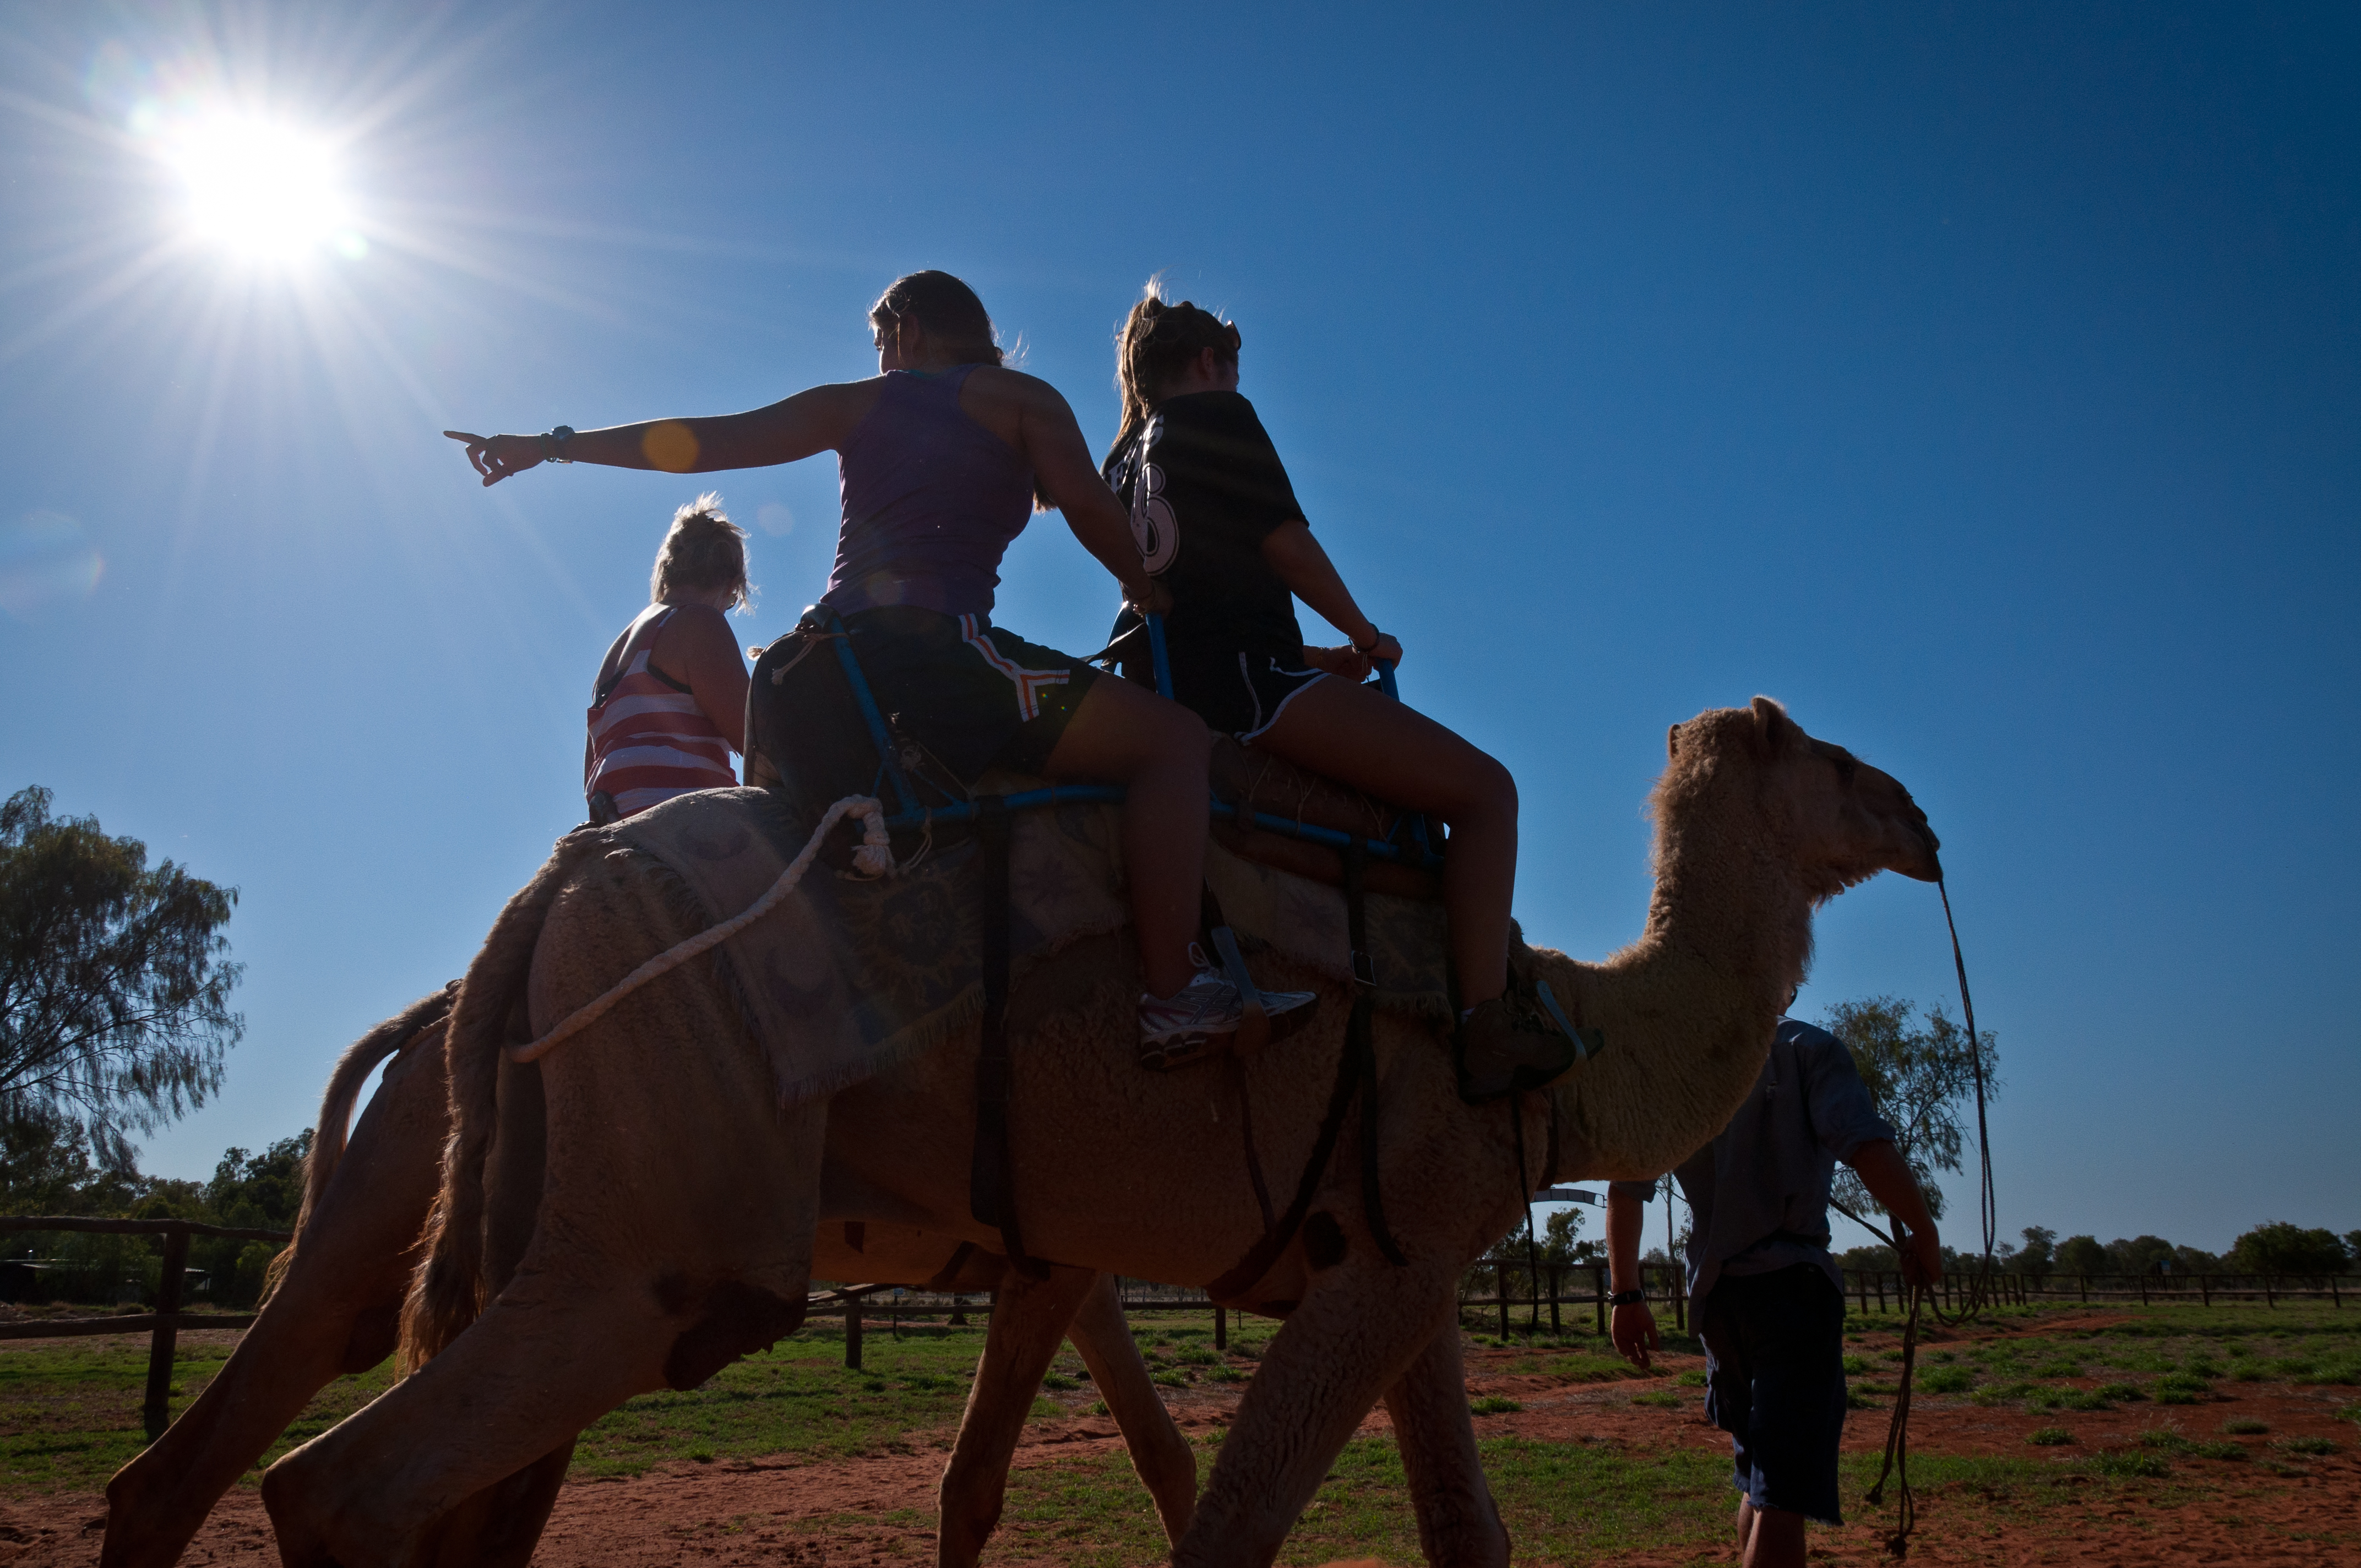 Optional Camel ride at the Camel Farm